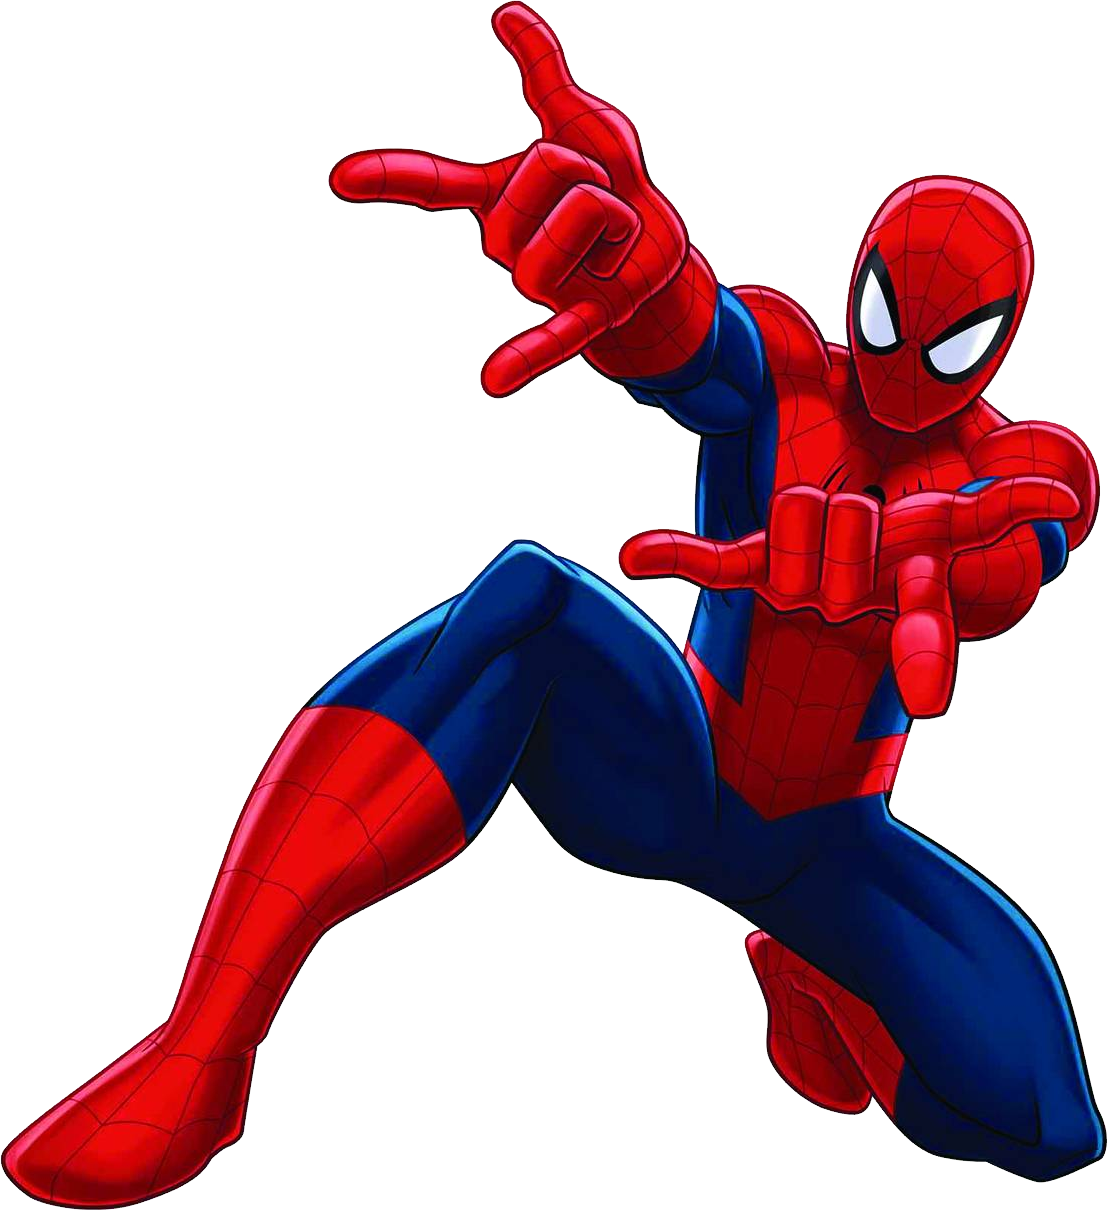 Download Spiderman Comic Transparent Background HQ PNG Image | FreePNGImg